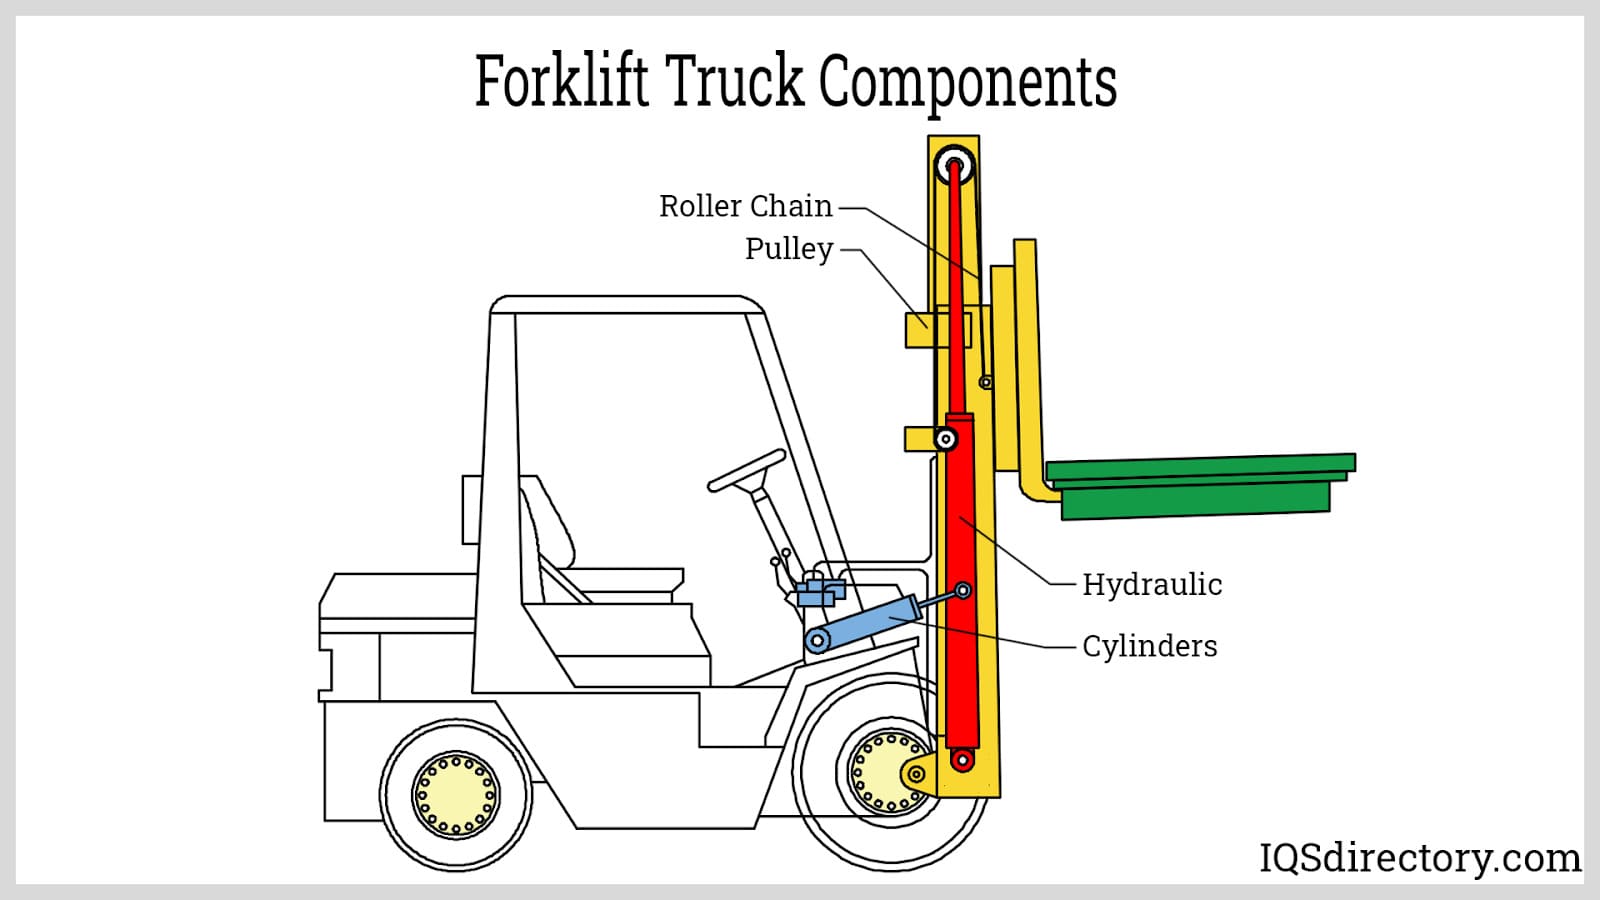 Forklift Truck Components